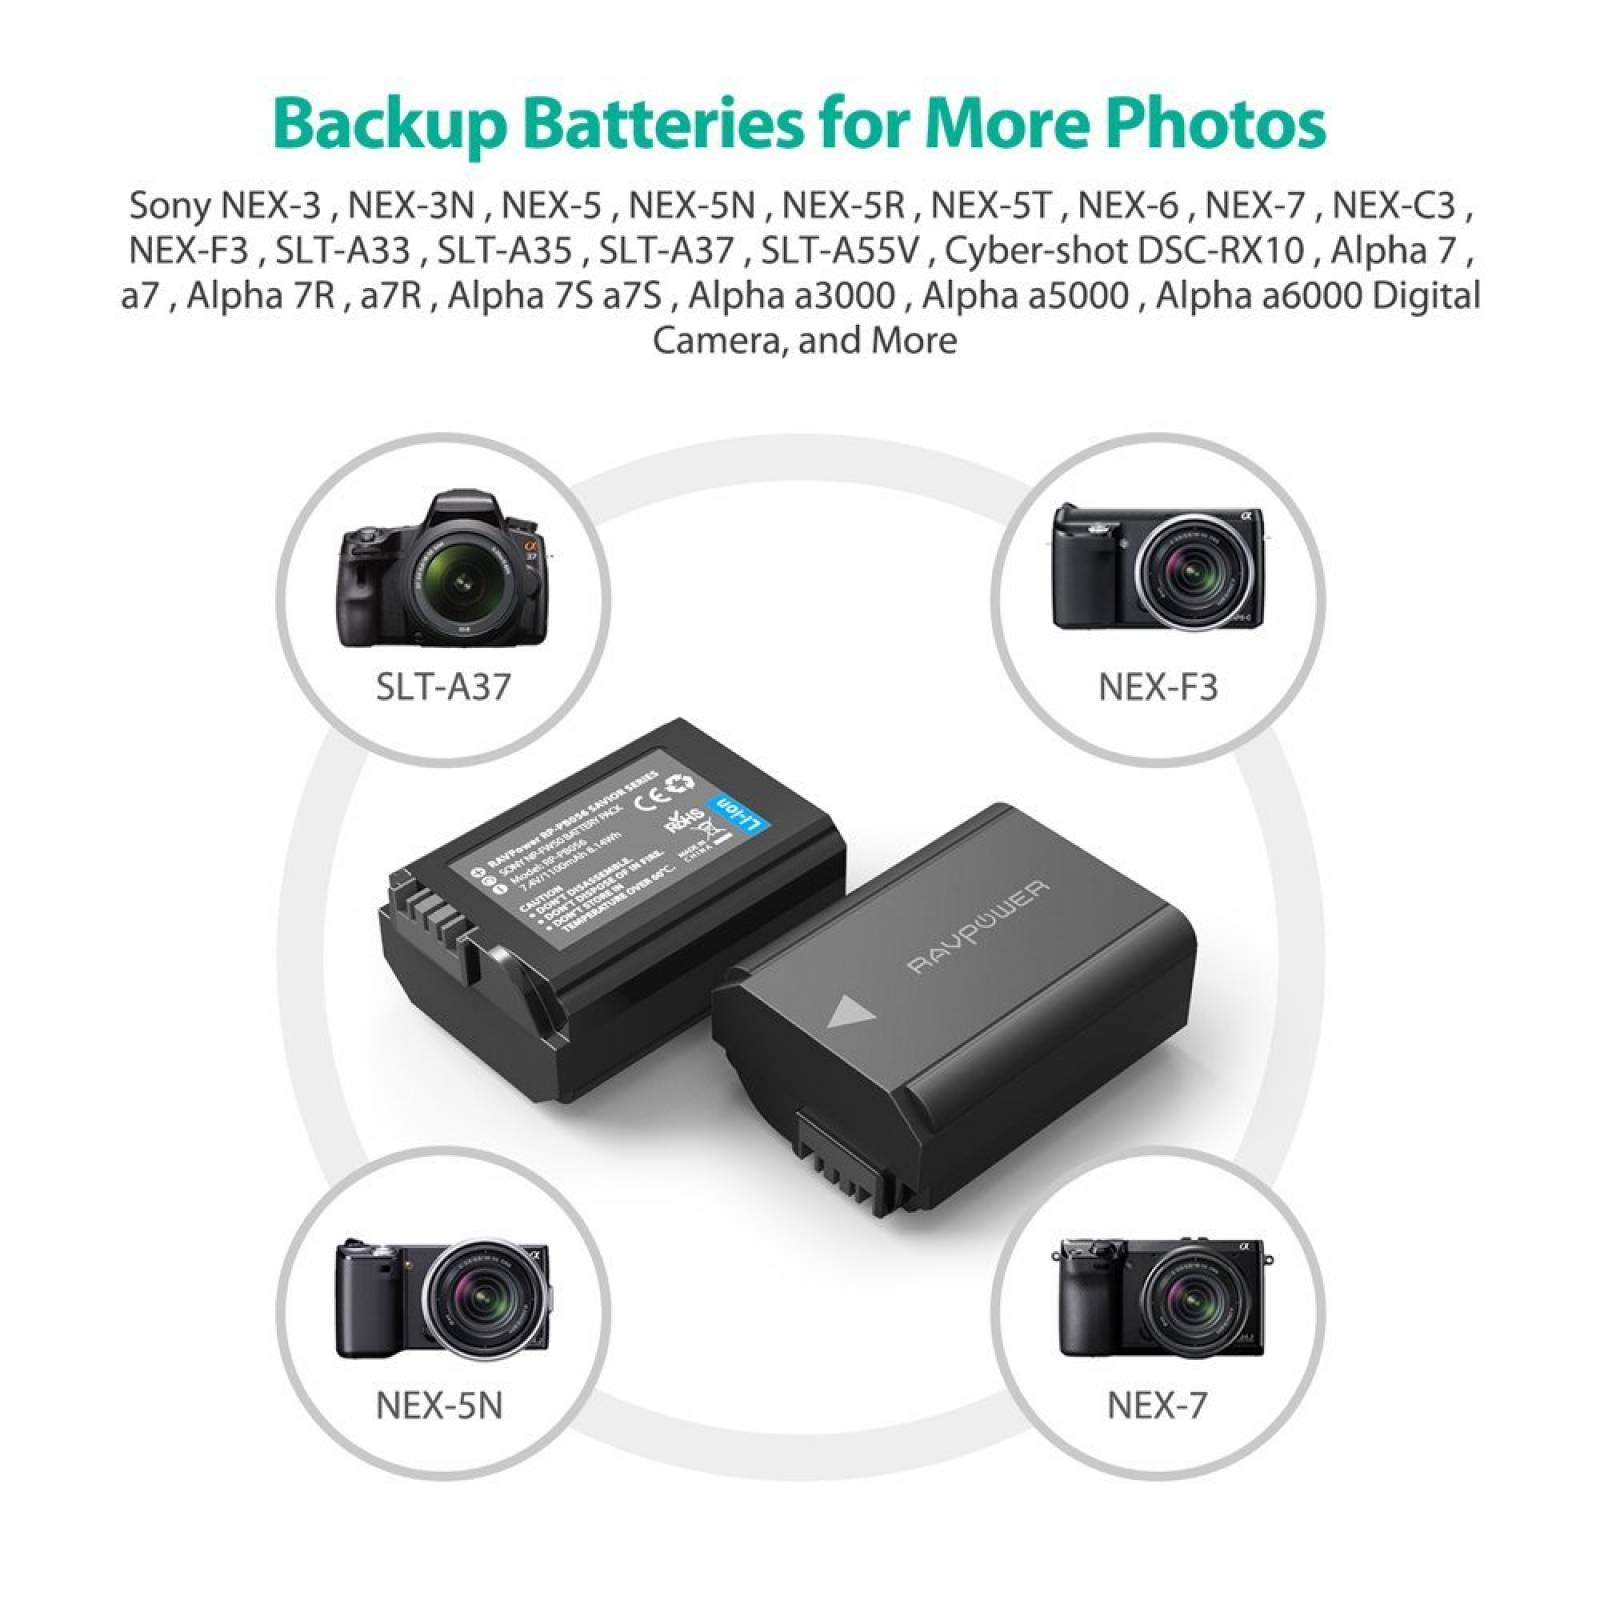 Batería Ravpower 2 Pack 1100mah Reemplazo Para Sony Np-fw50